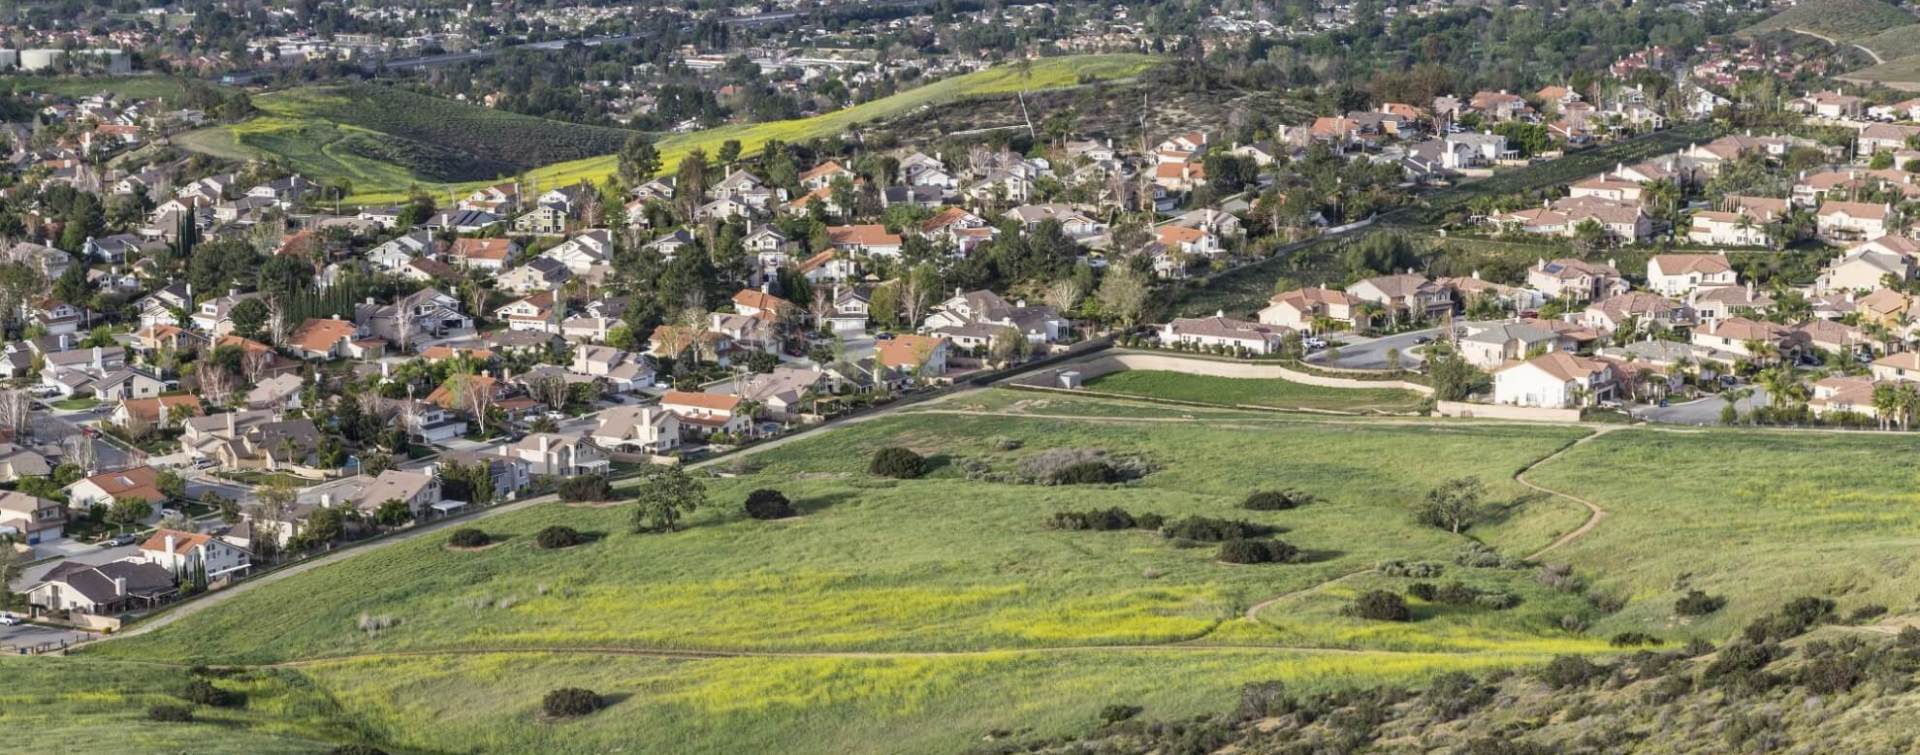 Hilltop view of Simi Valley suburban submarket of the Los Angeles metropolitan area